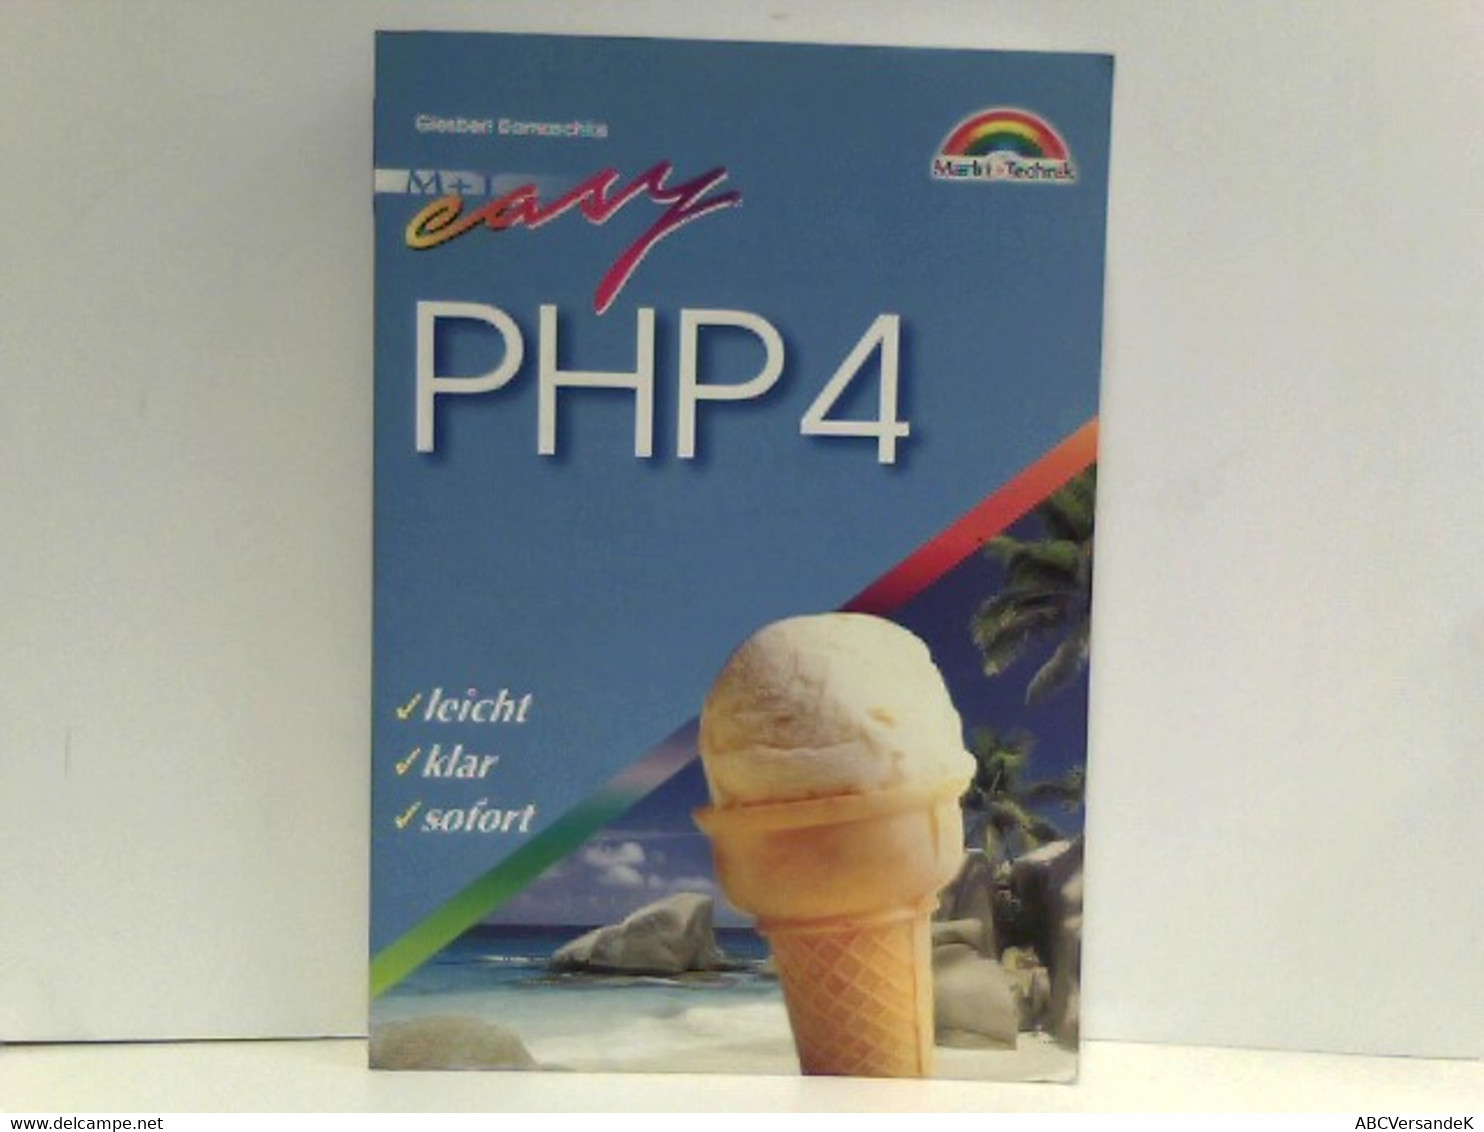 PHP 4 - M+T Easy - Leicht, Klar, Sofort - Technical